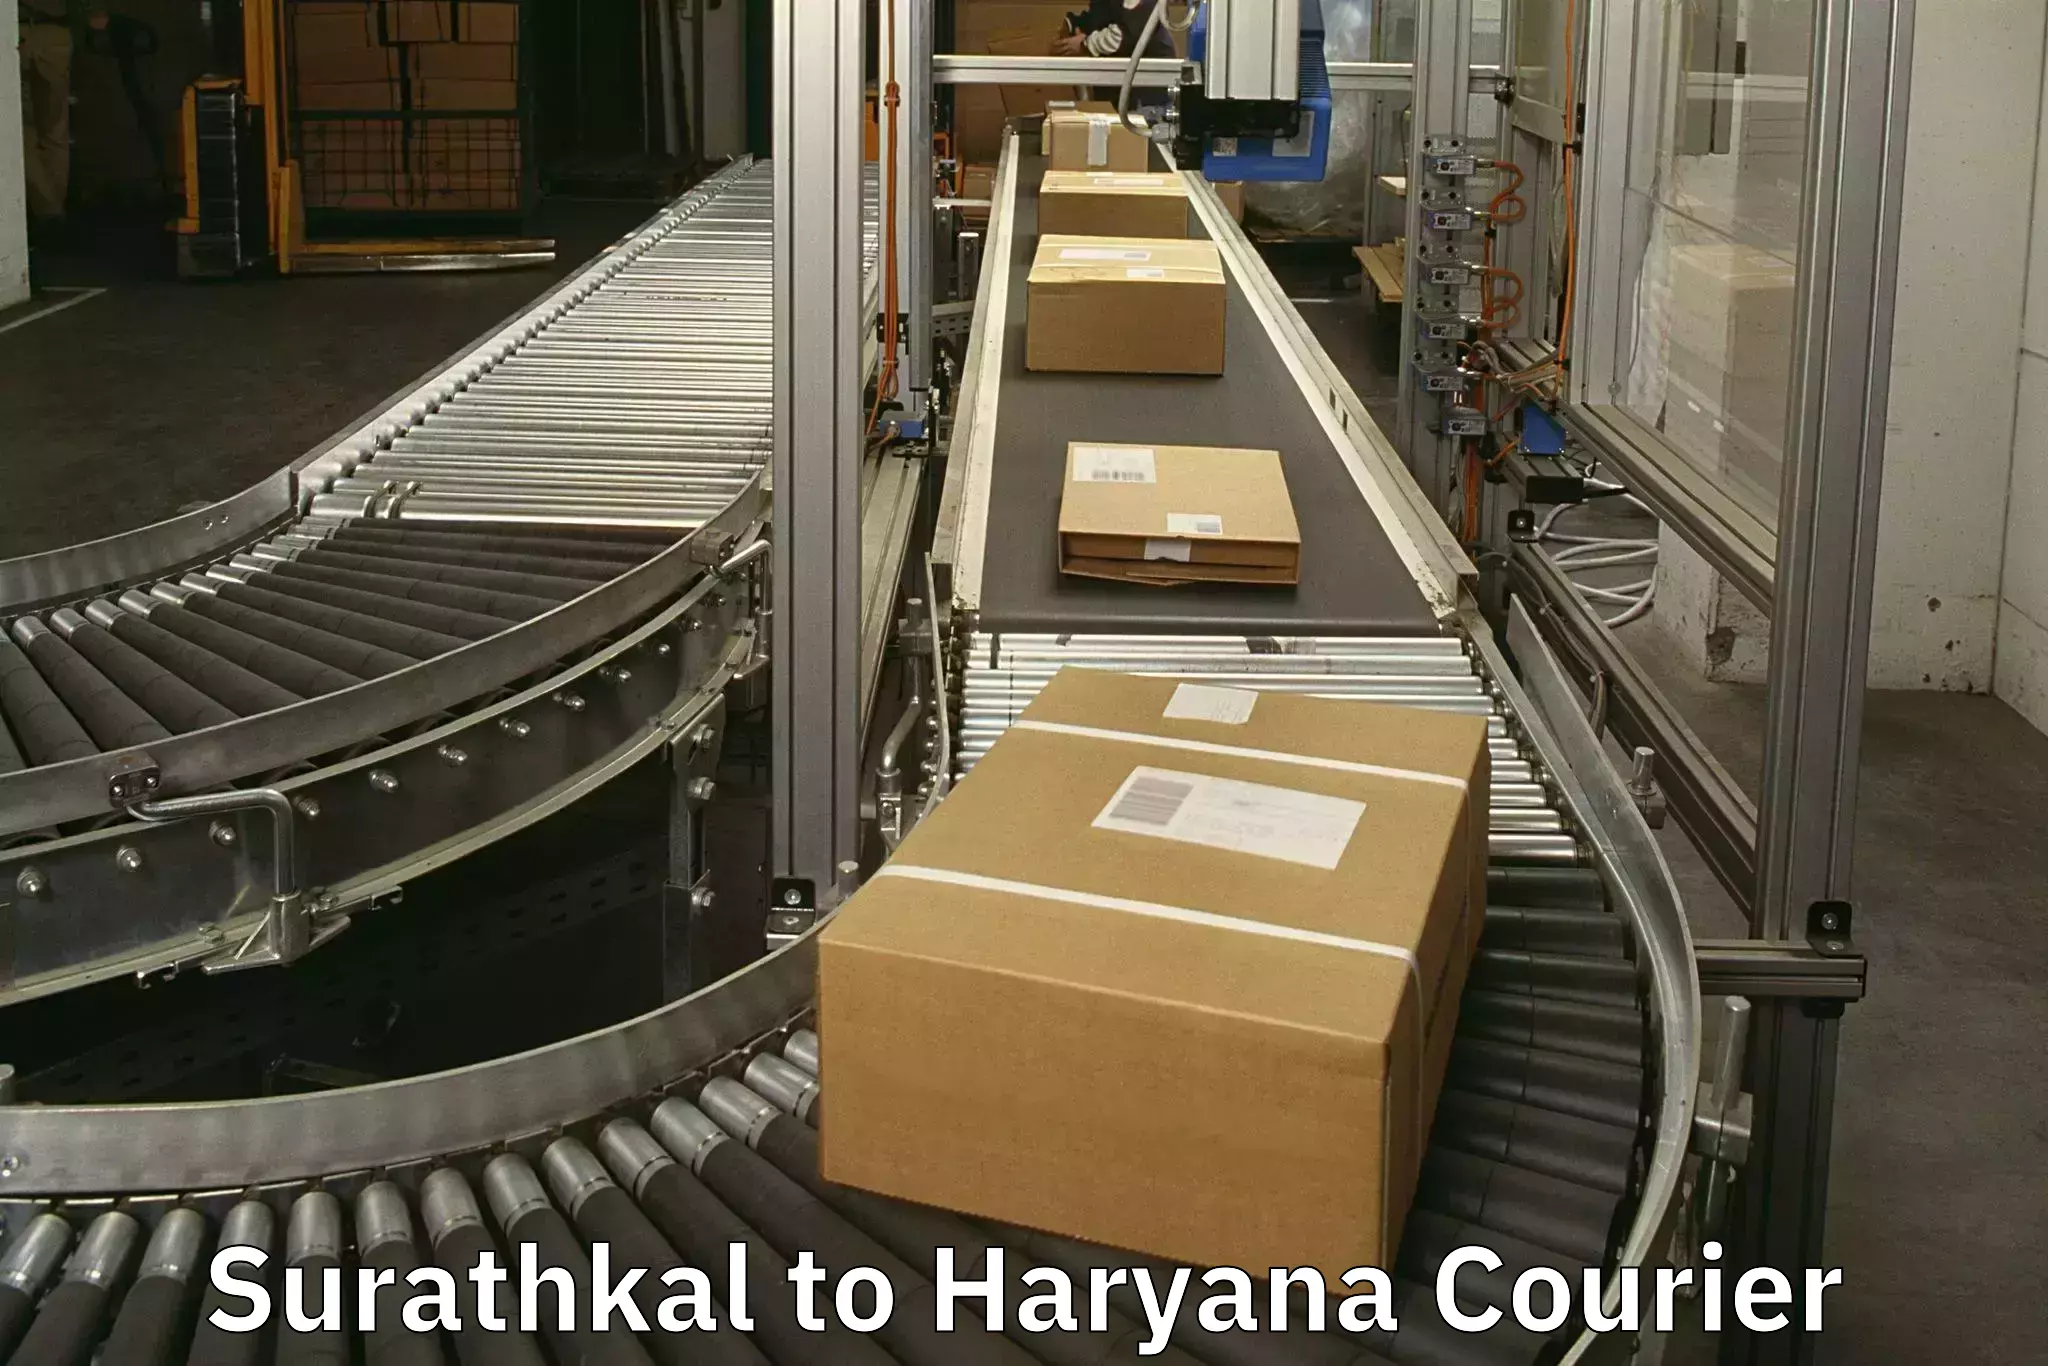 Luggage transport company Surathkal to Haryana